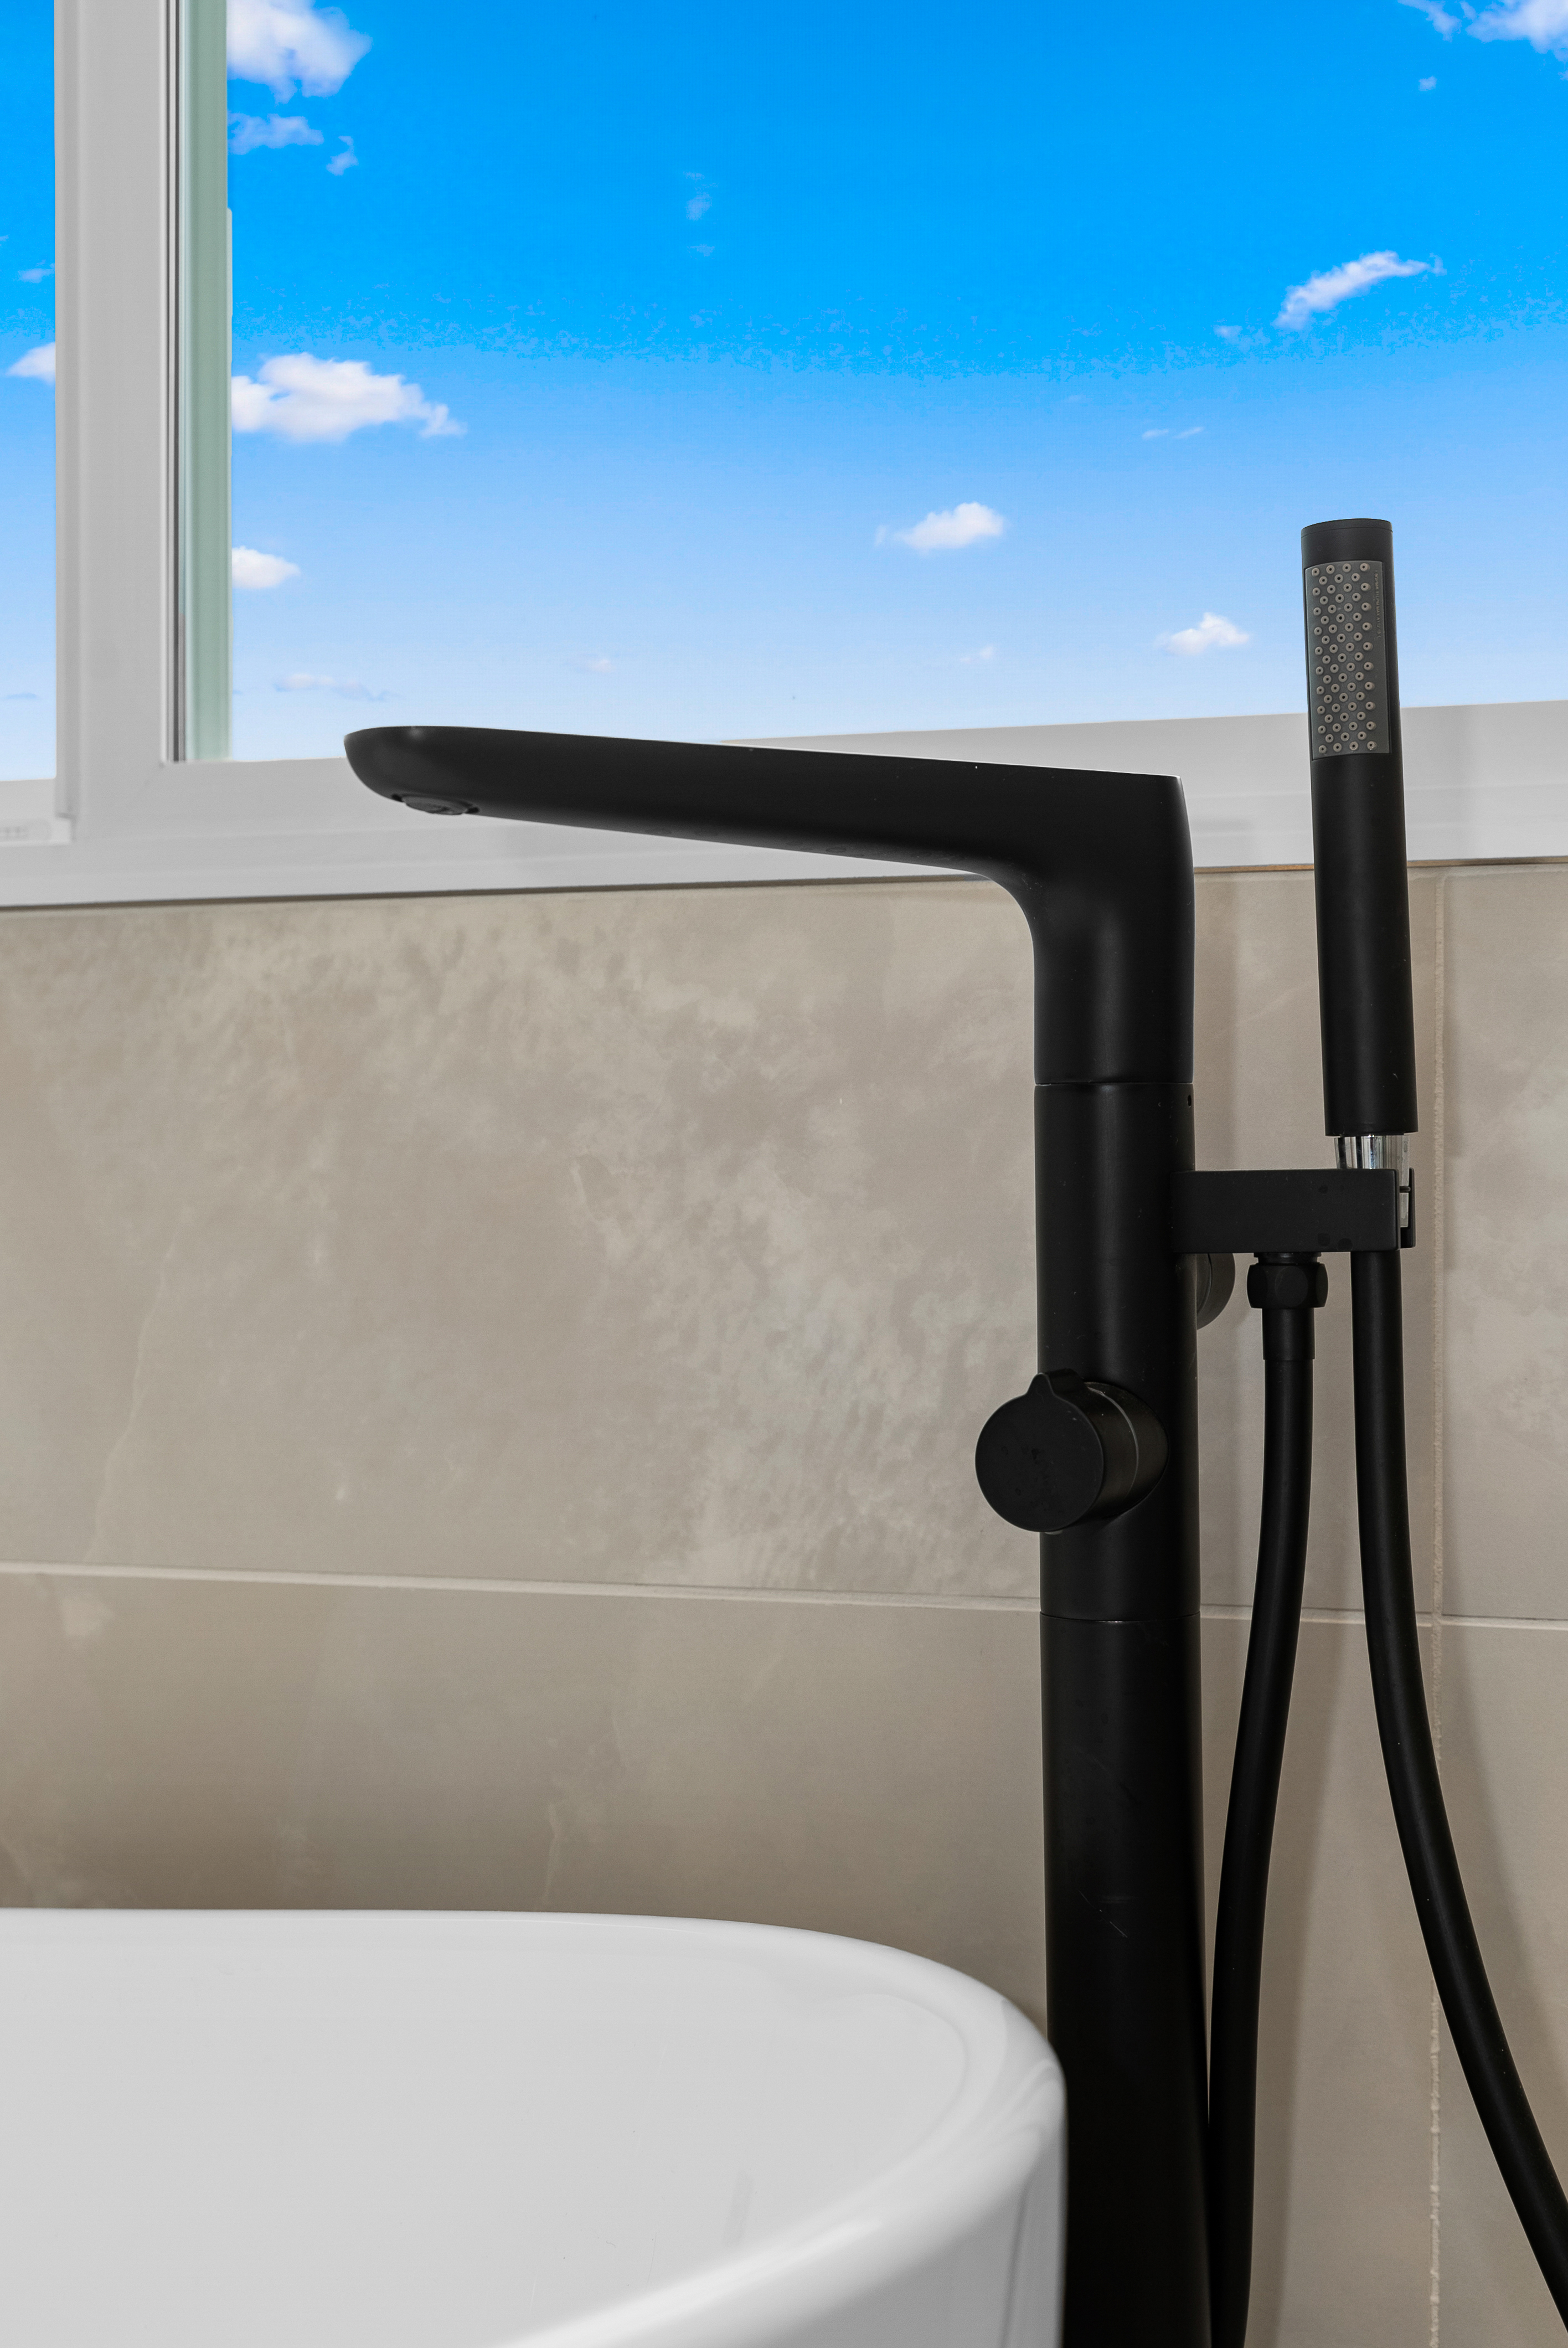 Matte black freestanding bathtub faucet with hand-held shower head